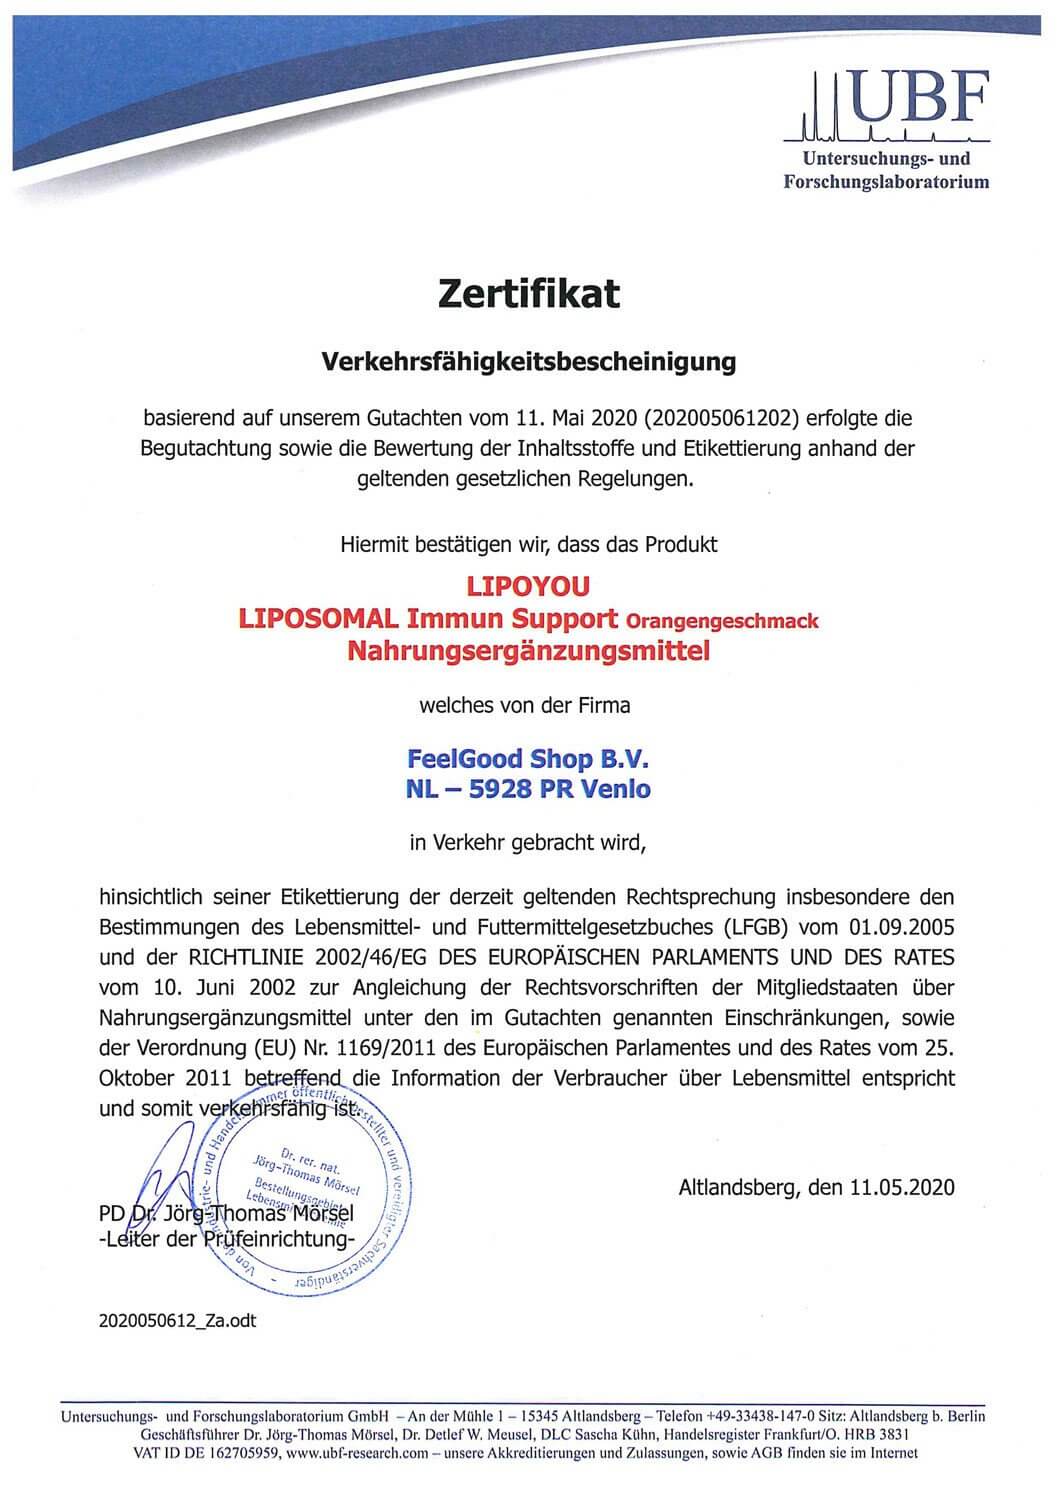 LIPOSOMAL Immun Support Zertifikat